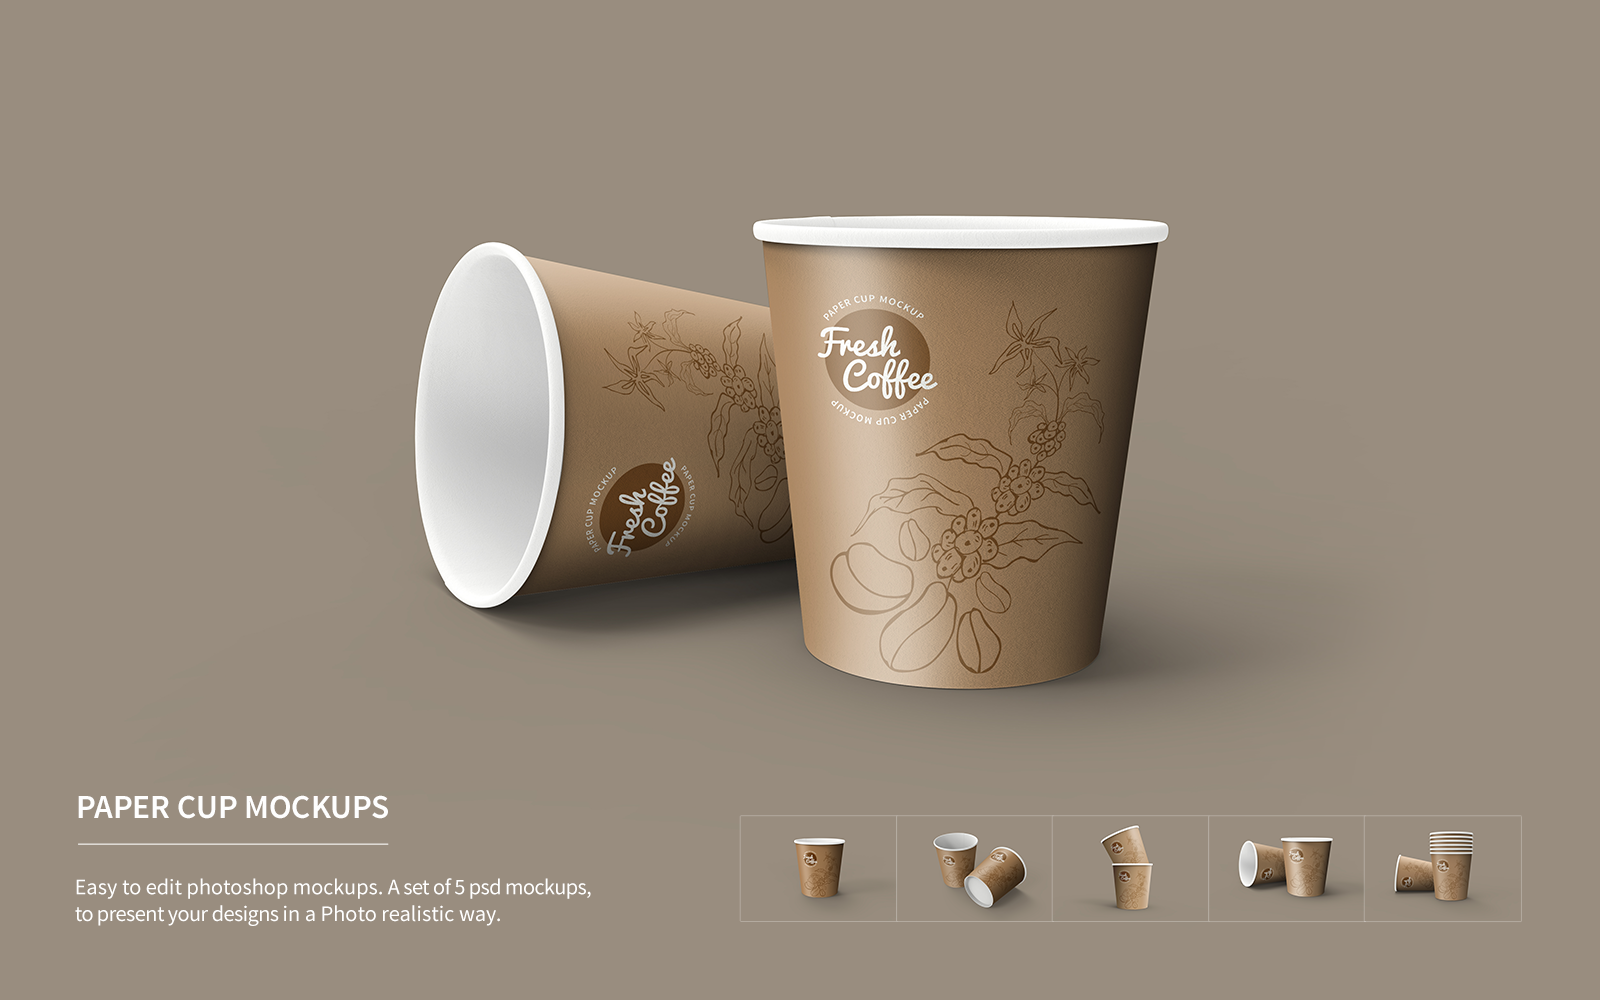 Paper Cup Packaging Mockups